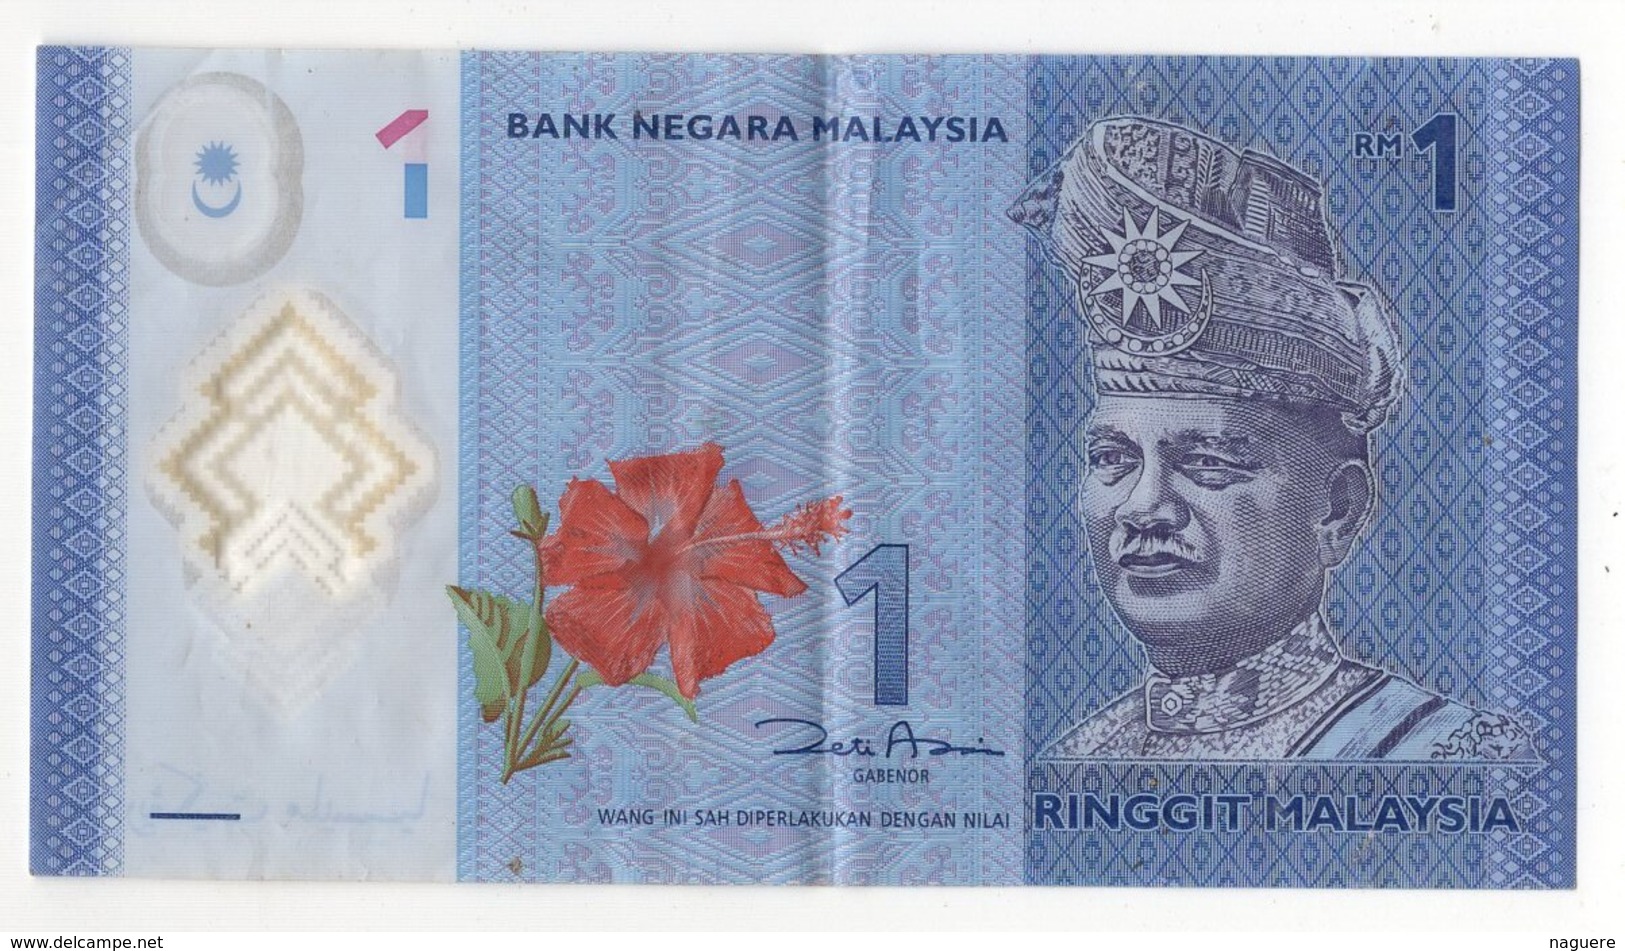 BANK NEGARA MALAYSIA 1 - Malasia